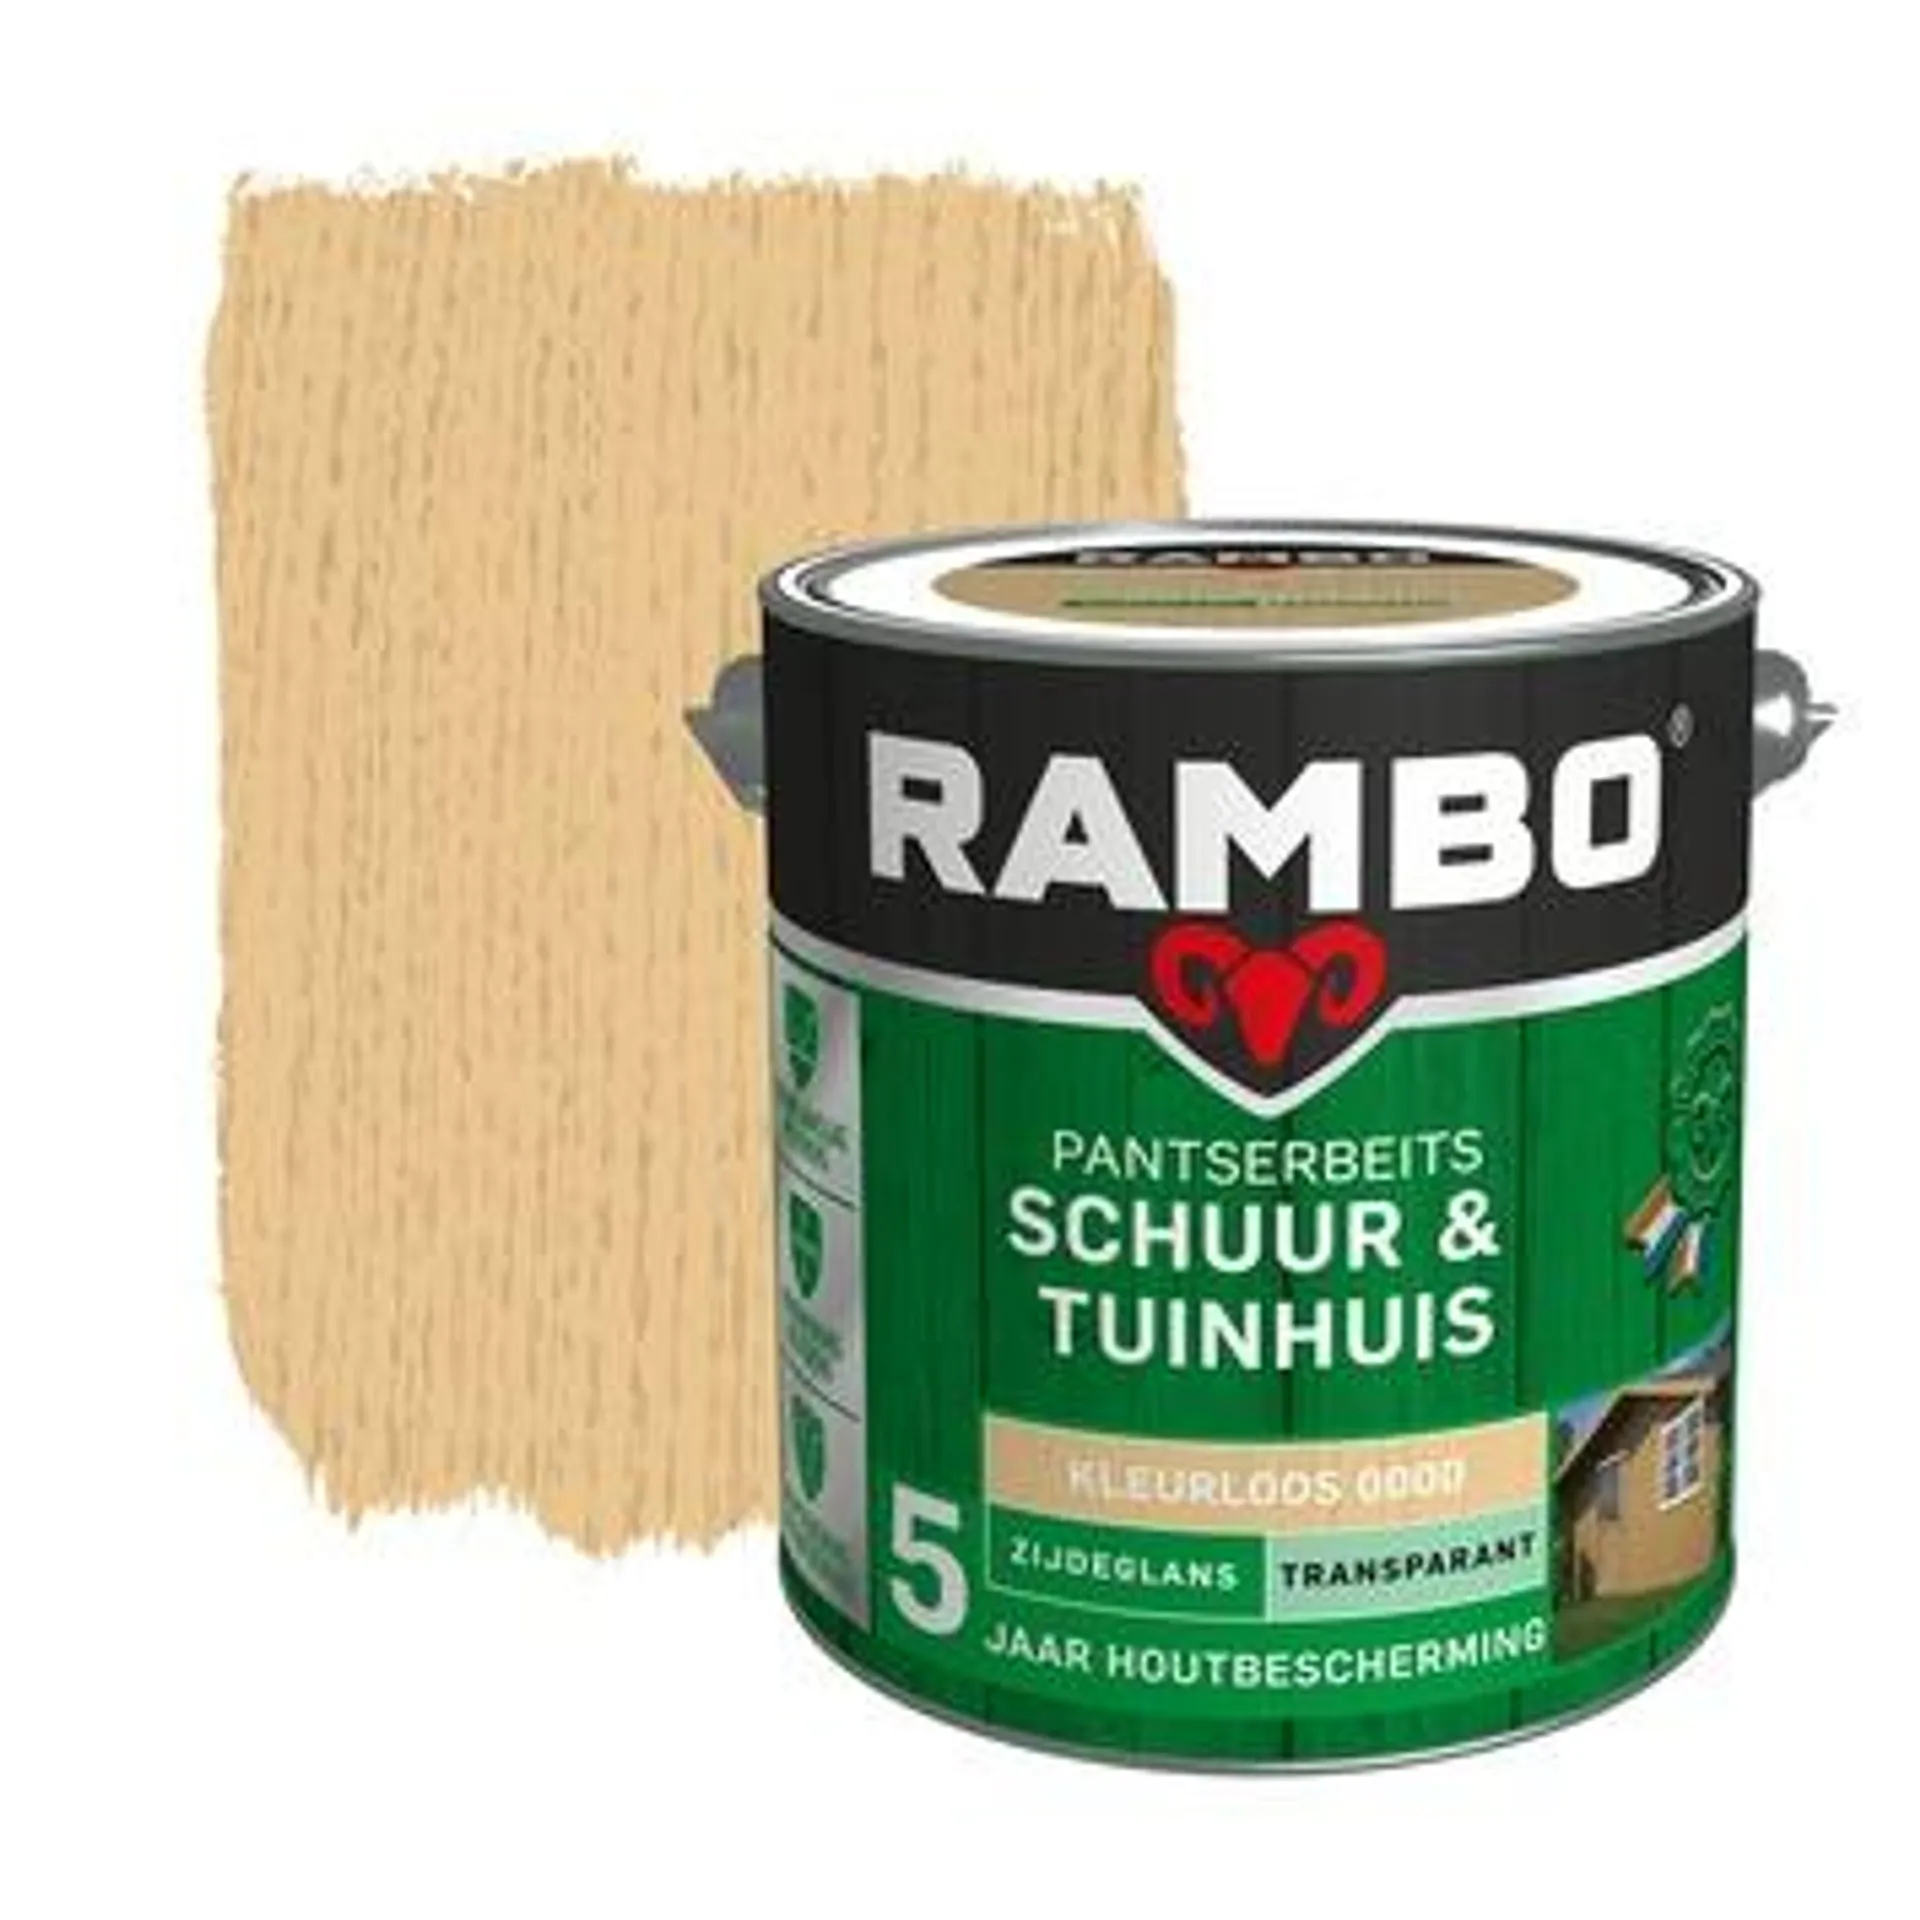 Rambo pantserbeits schuur & tuinhuis transparant kleurloos zijdeglans 2,5 liter